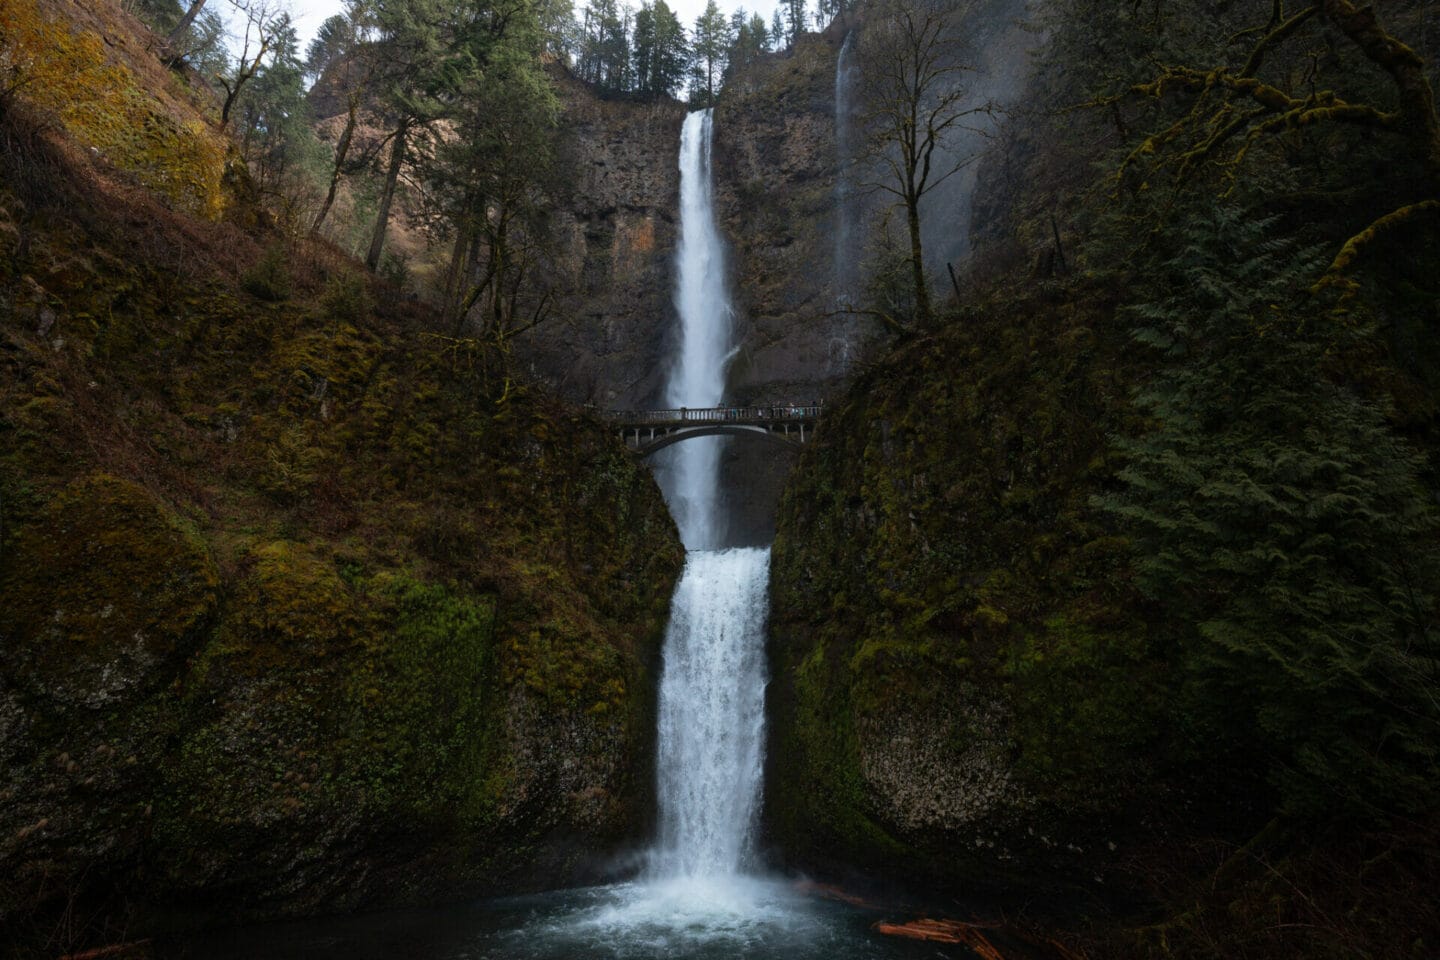 Oregon road trip itinerary - Multnomah Falls in the Columbia River Gorge